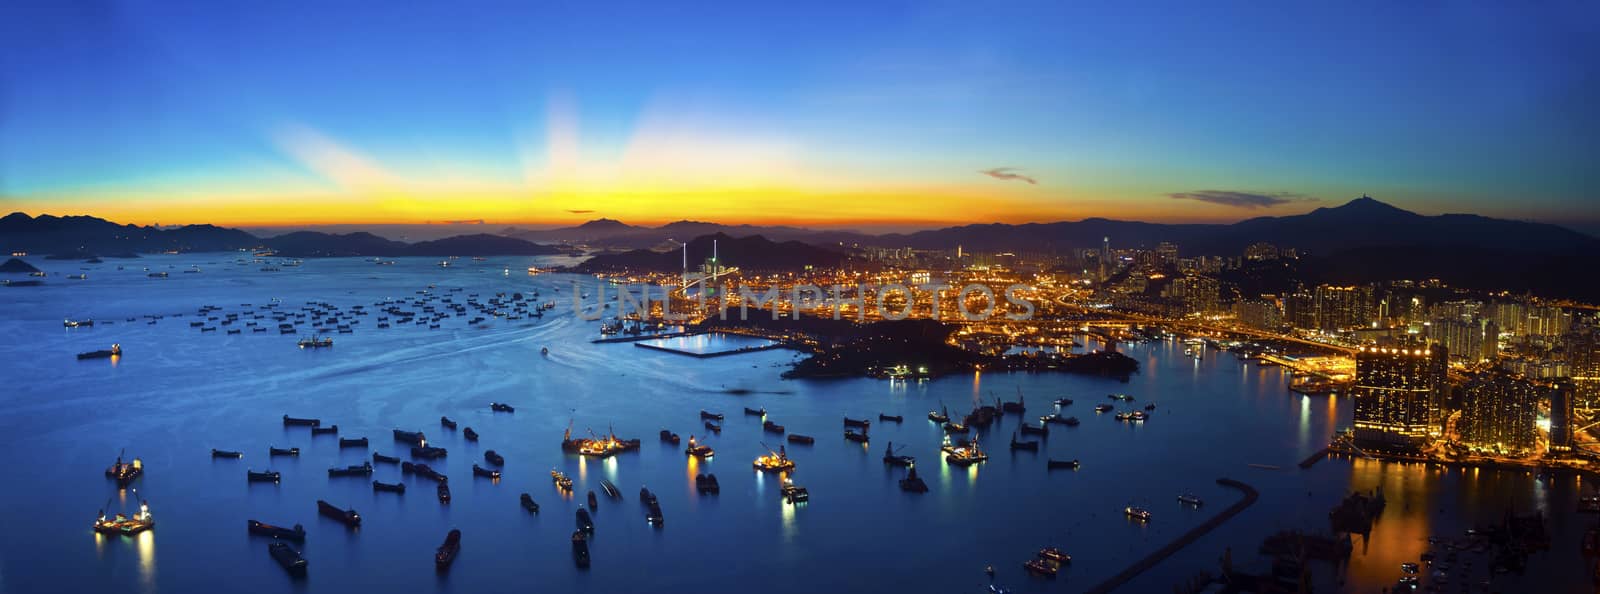 Hong Kong majestic sunset by kawing921